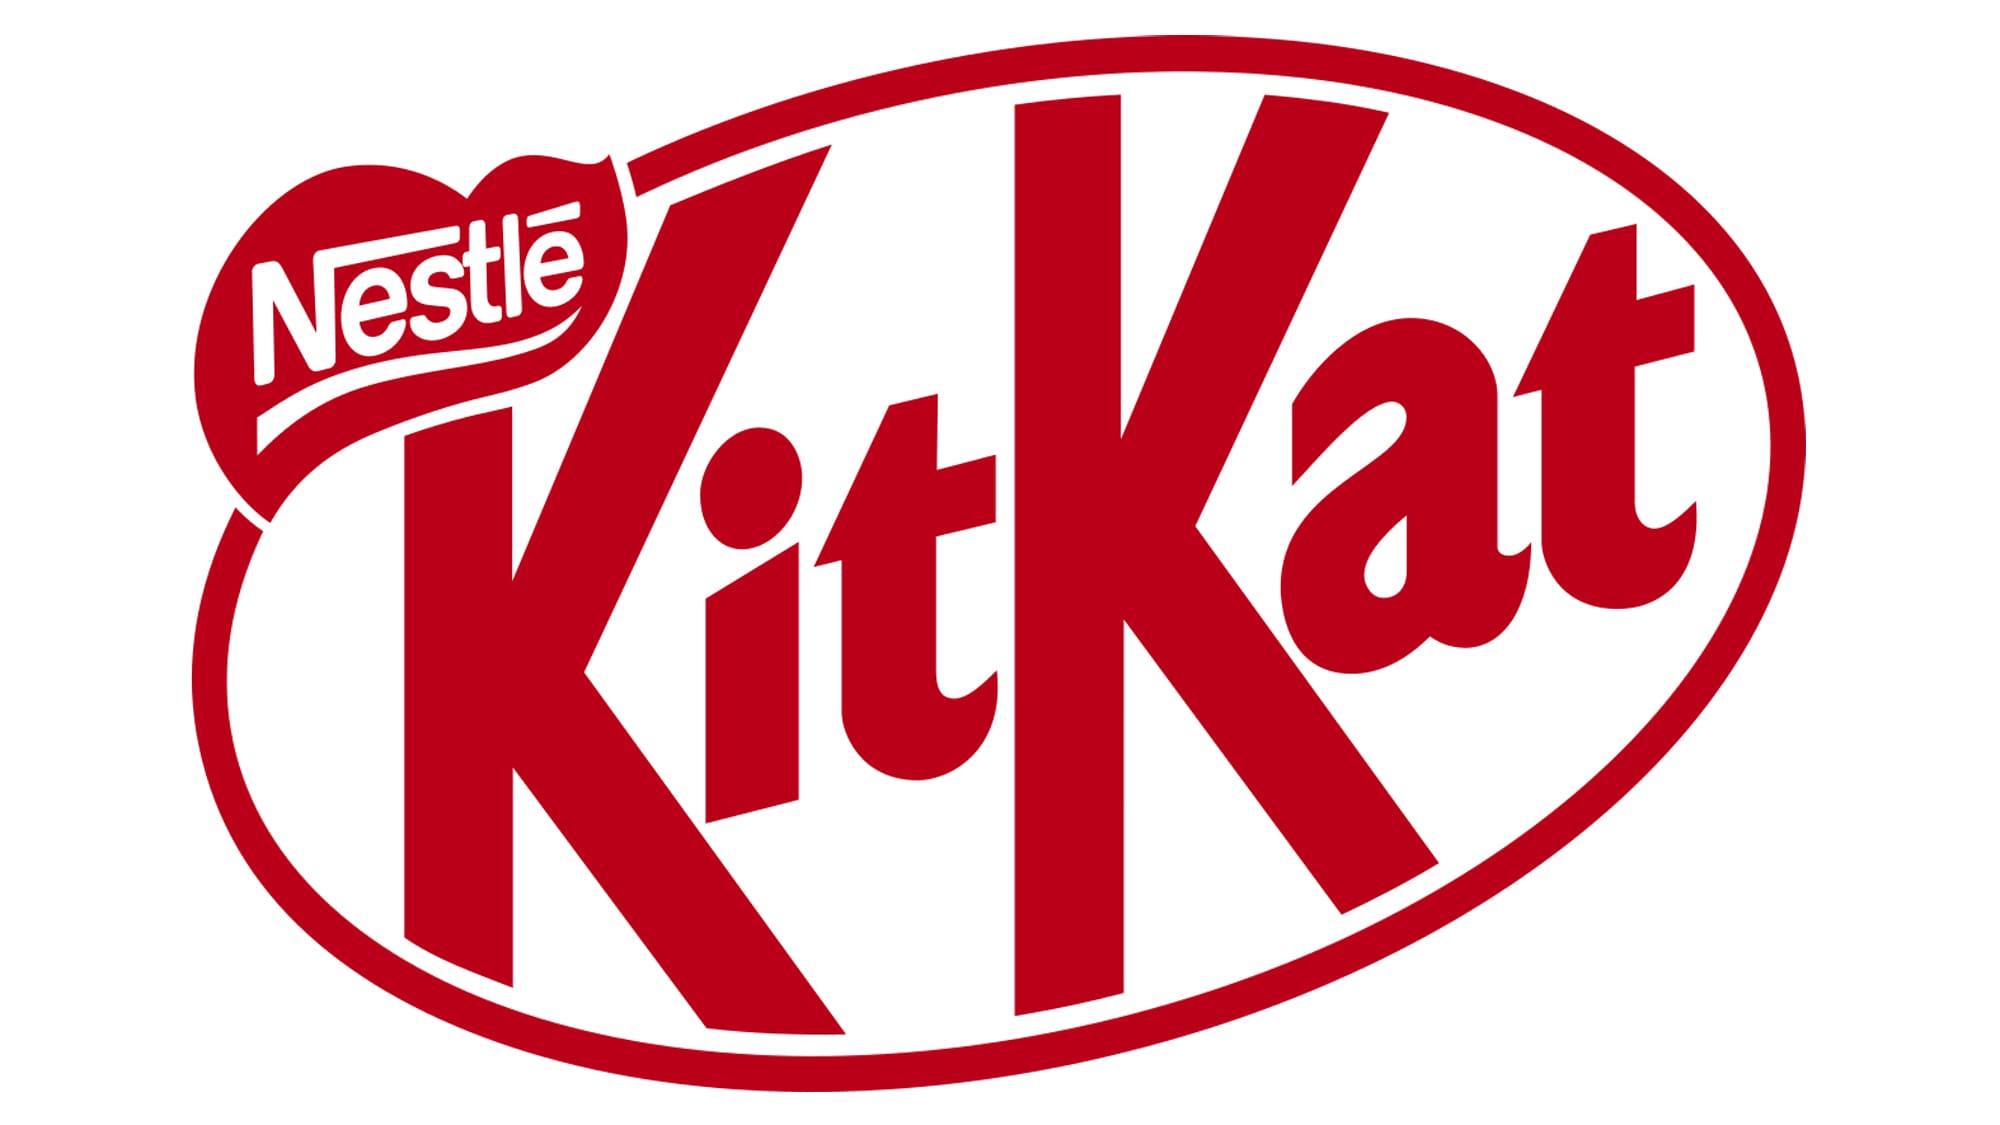 KitKat Logo Design: History & Evolution